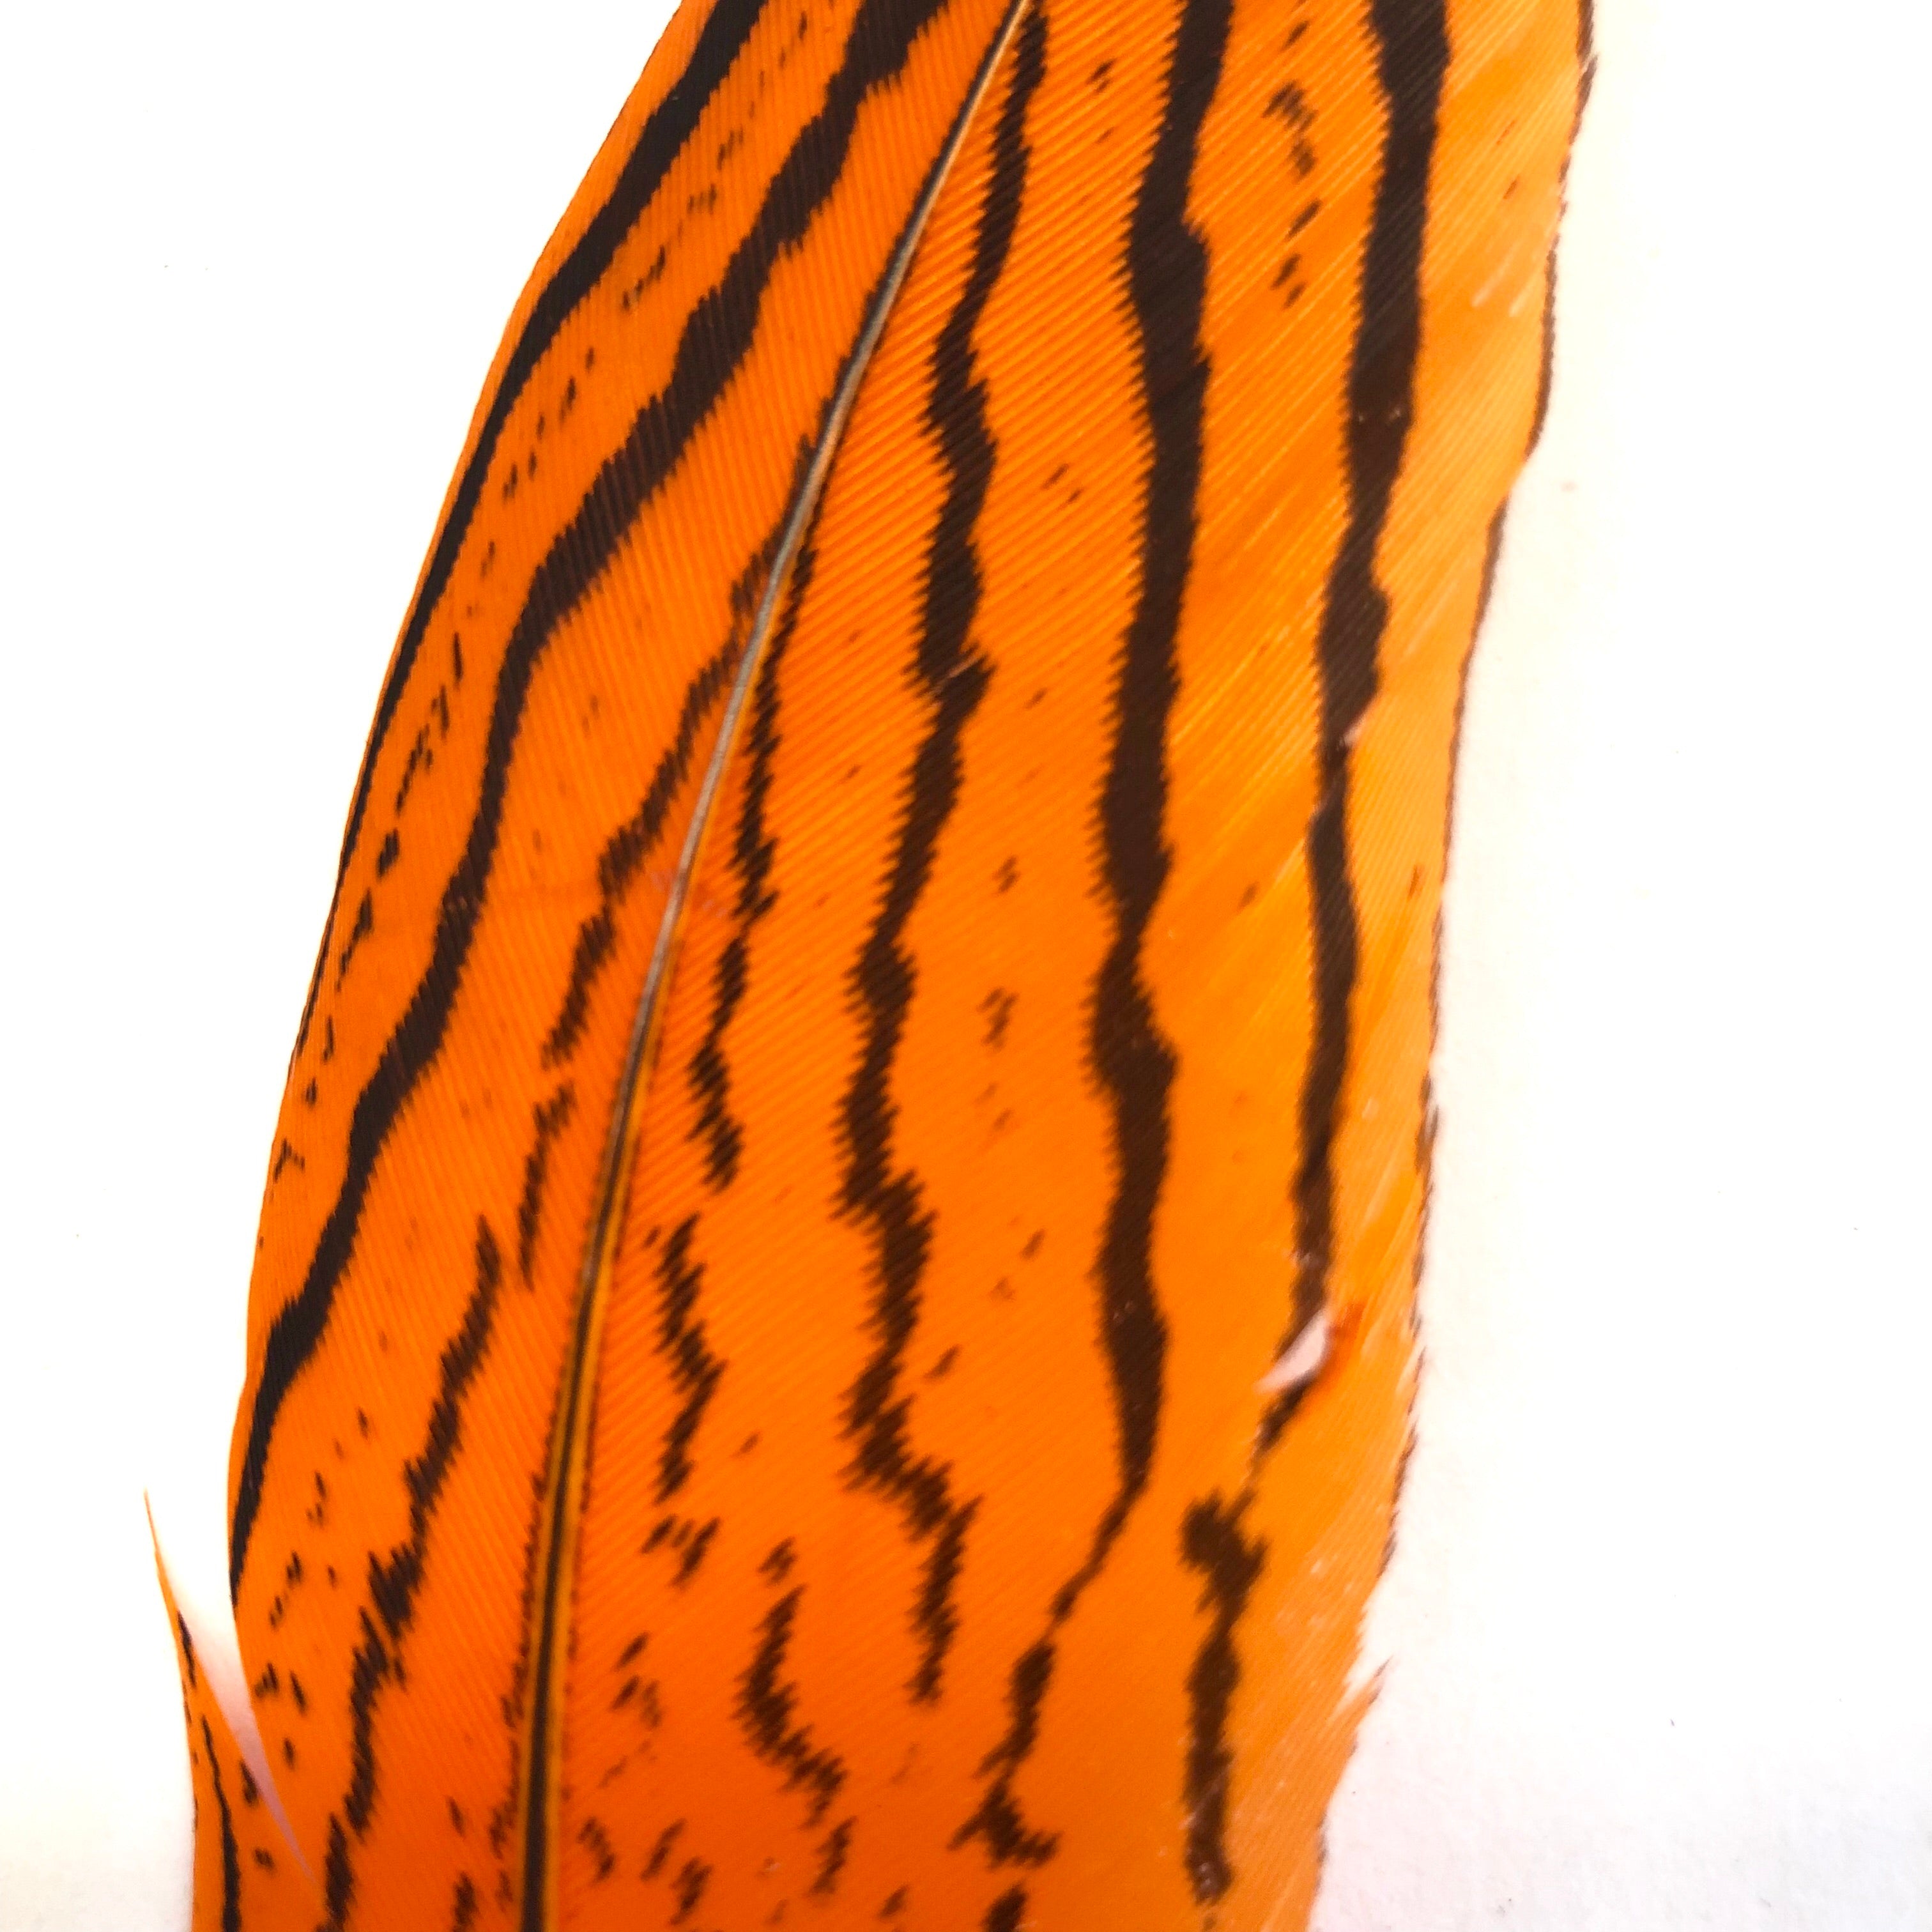 Under 6" Silver Pheasant Tail Feather x 10 pcs - Orange